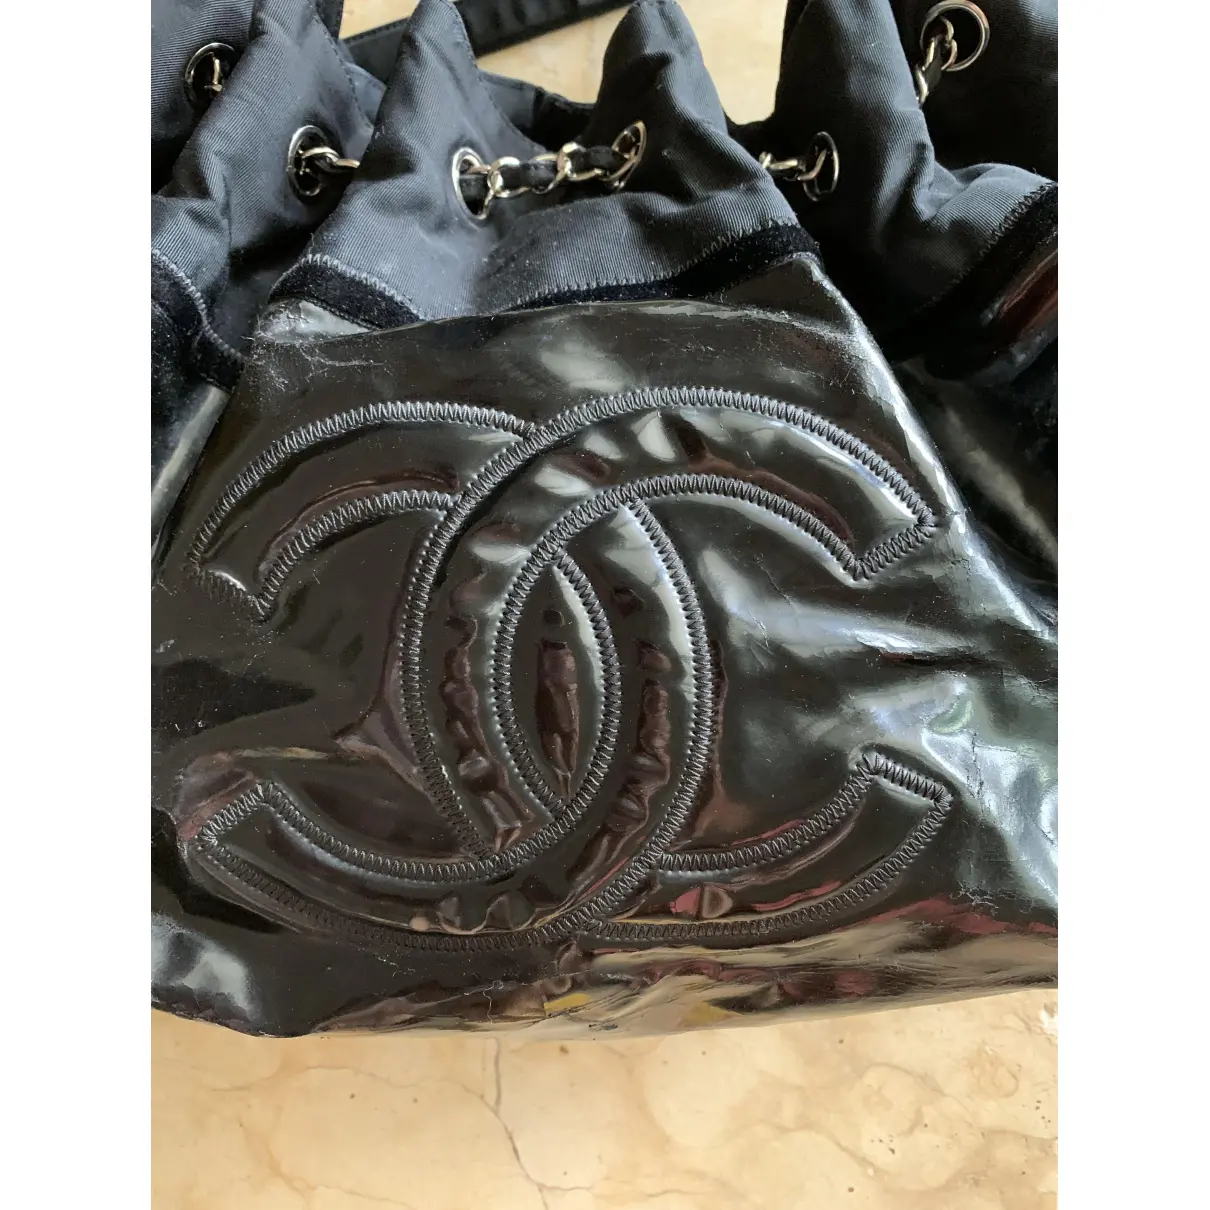 Buy Chanel Coco Cabas patent leather handbag online